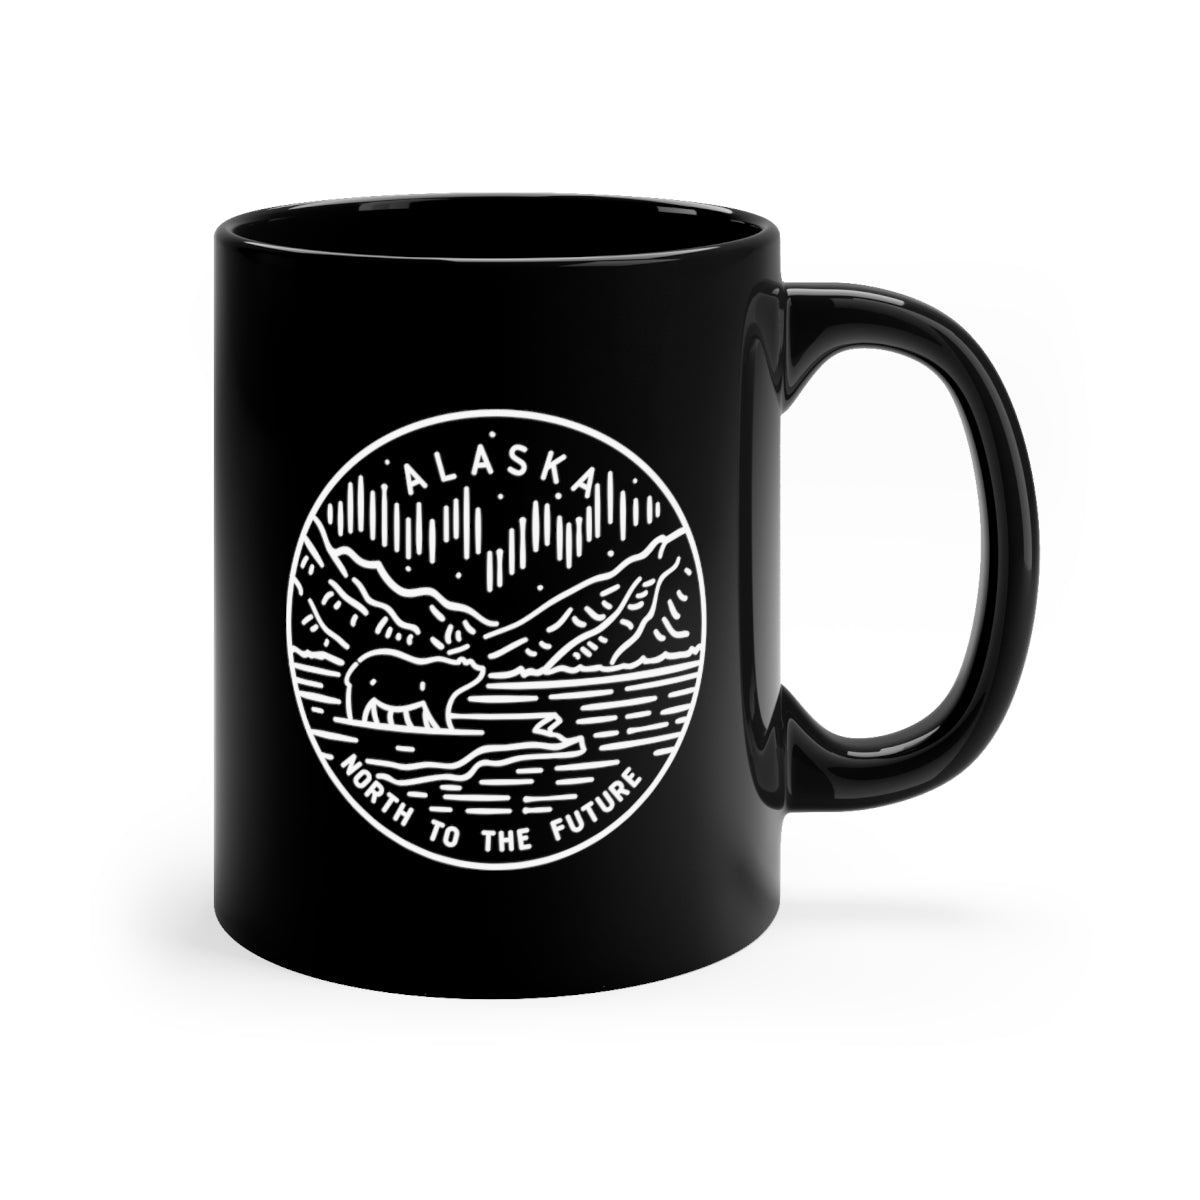 State of Alaska Ceramic Mug - The Northwest Store